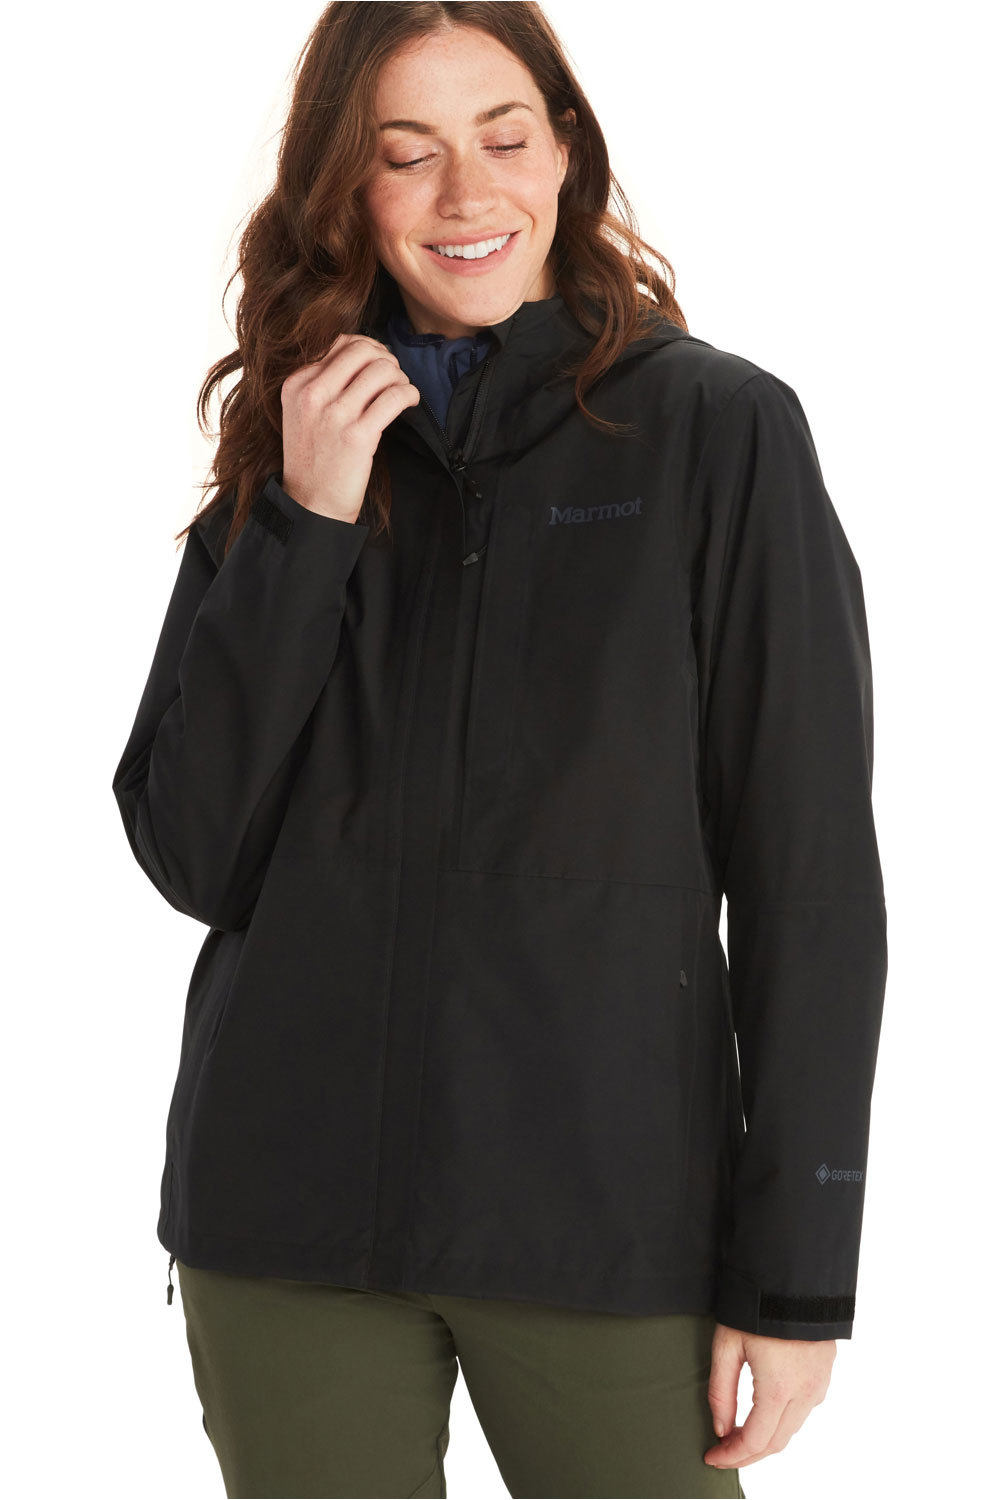 Marmot chaqueta impermeable mujer Wm's Minimalist GORE-TEX Jacket vista frontal